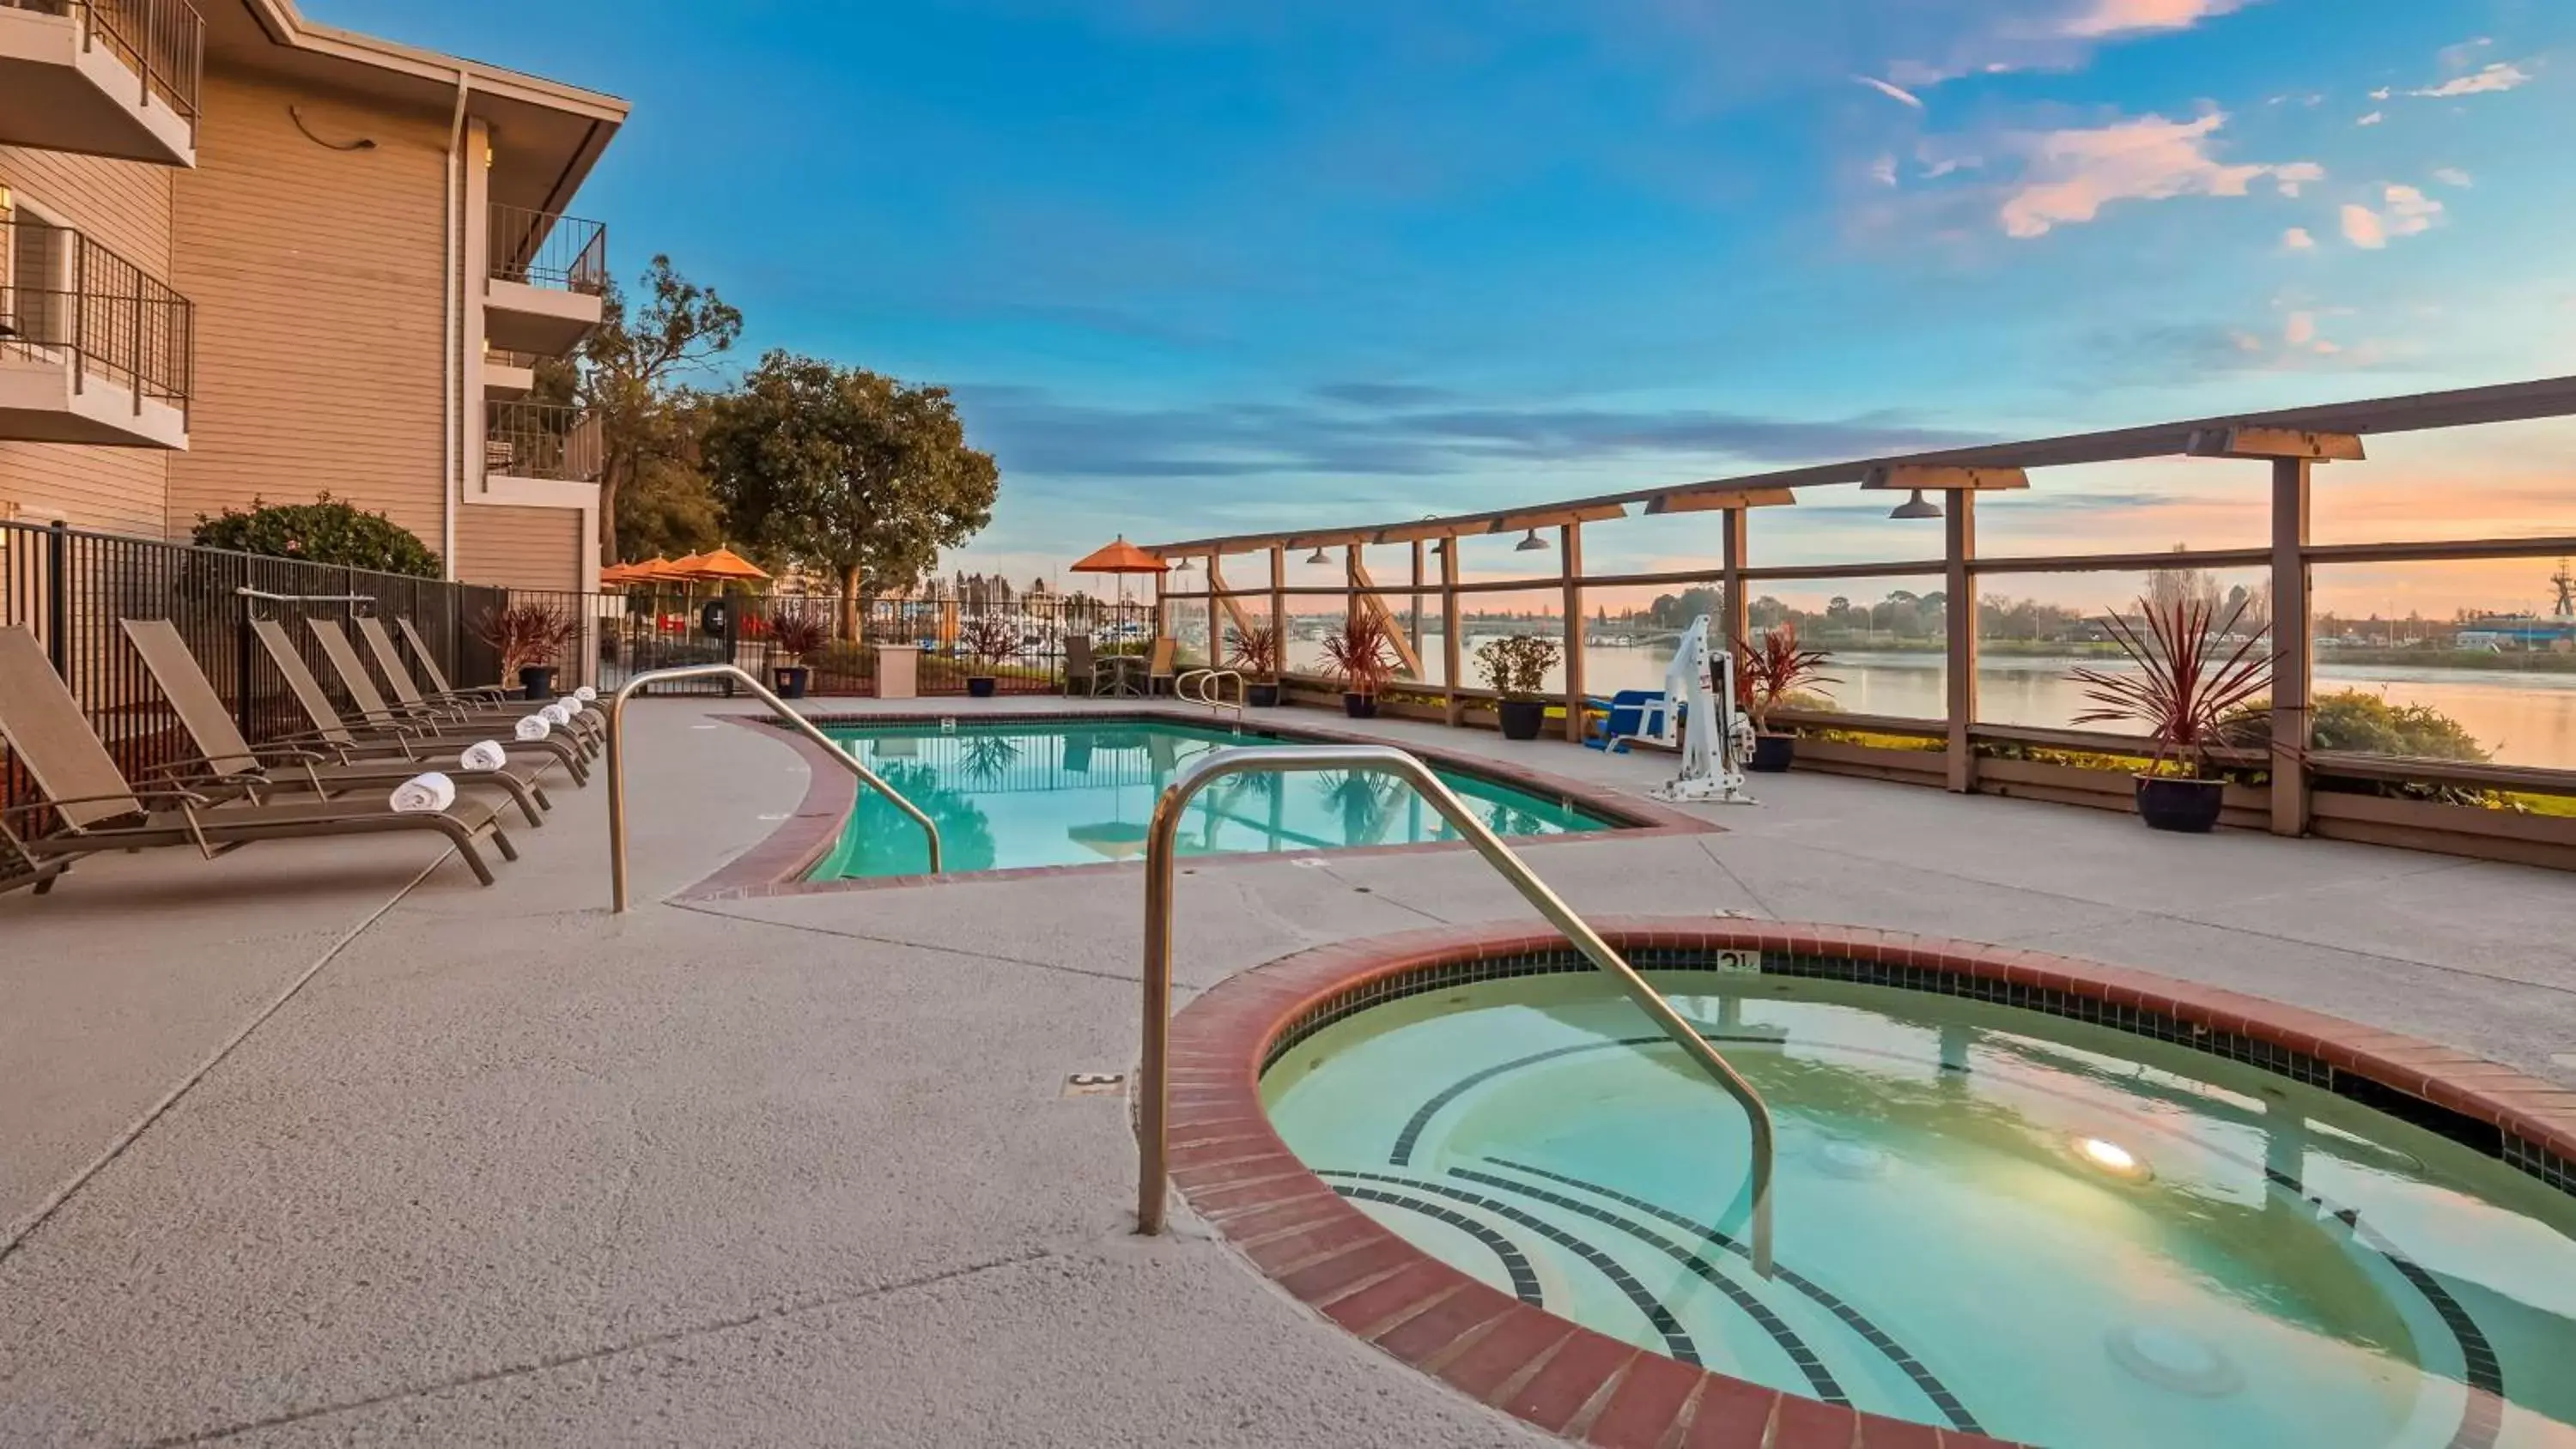 On site, Swimming Pool in Best Western Plus Bayside Hotel